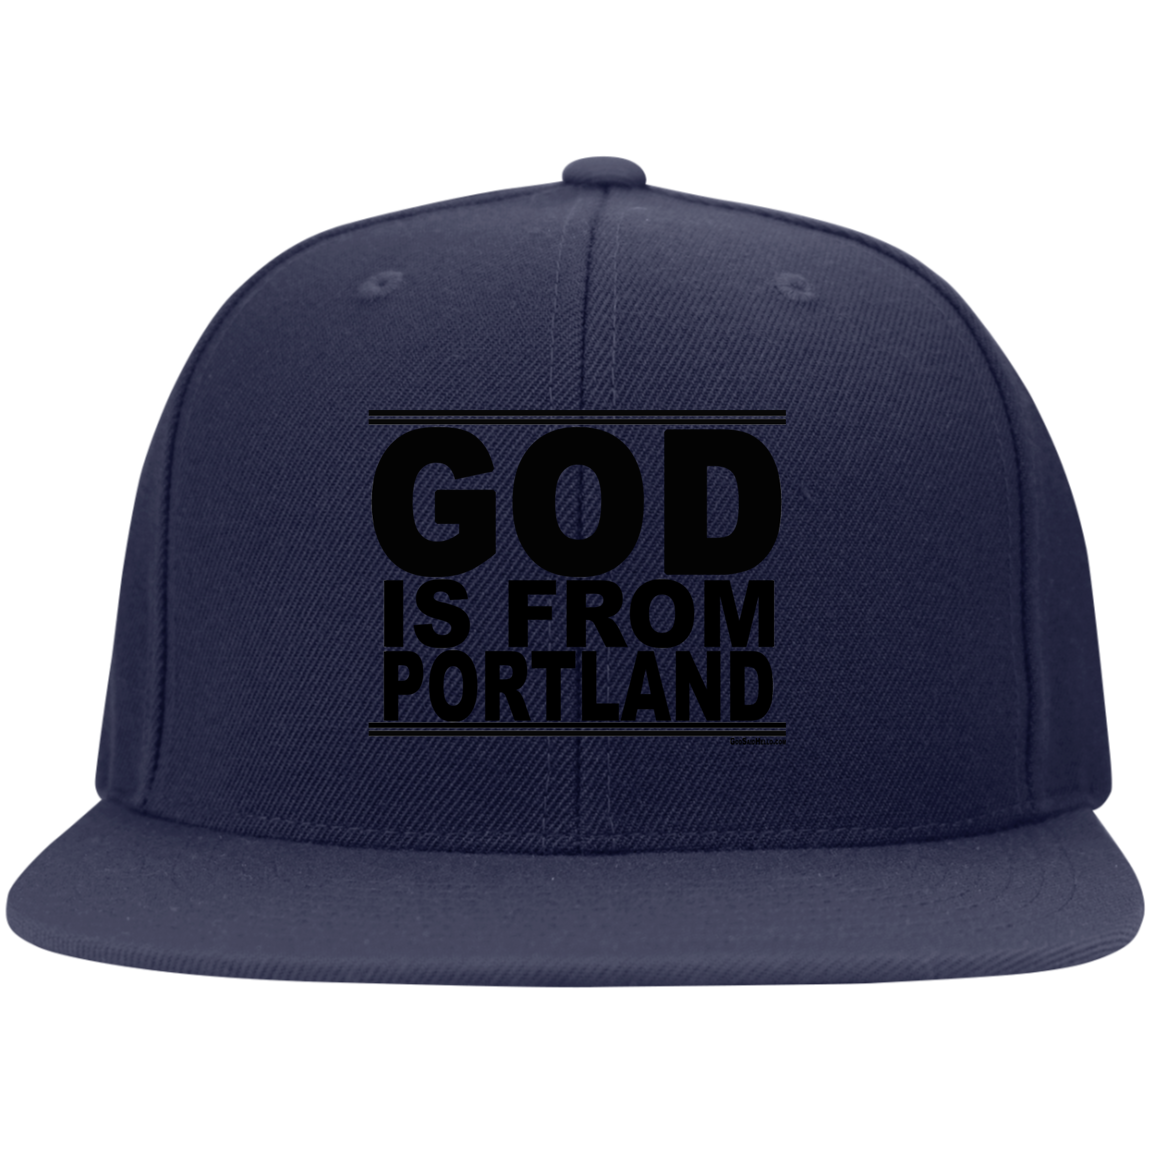 #GodIsFromPortland - Snapback Hat